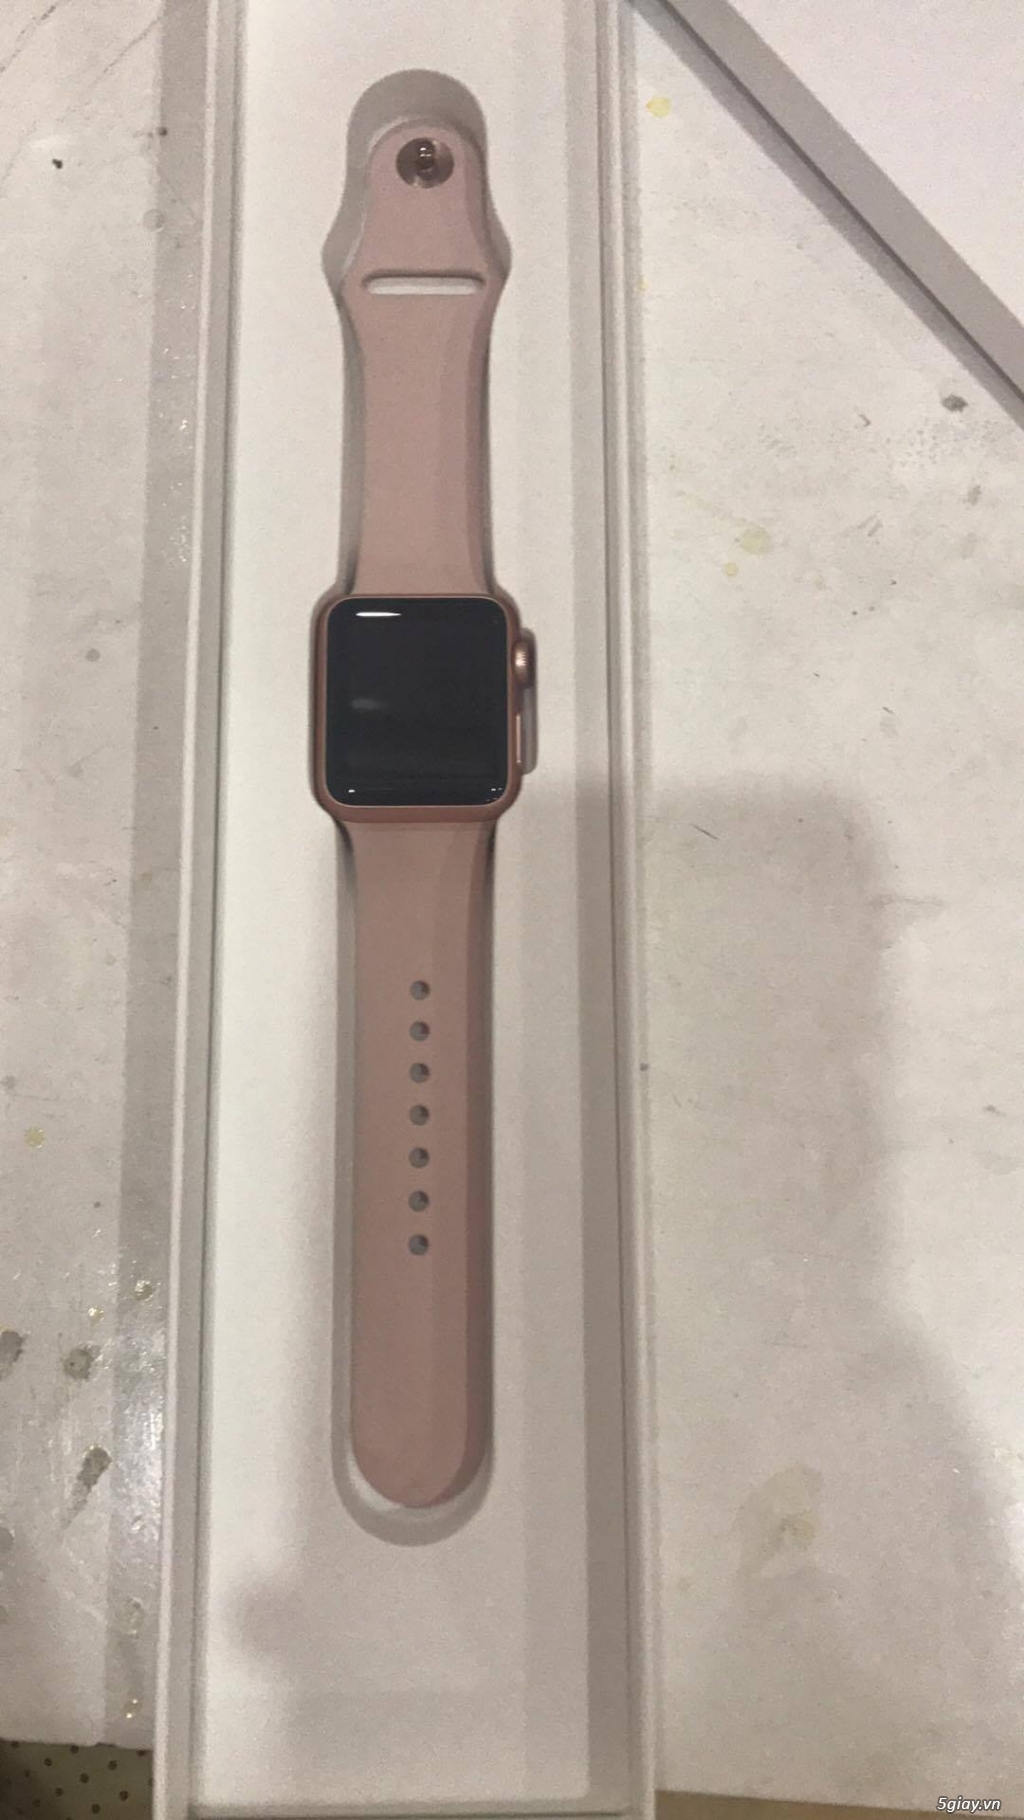 CẦN BÁN: Apple Watch series 1 Rose gold sport new chưa sử dụng